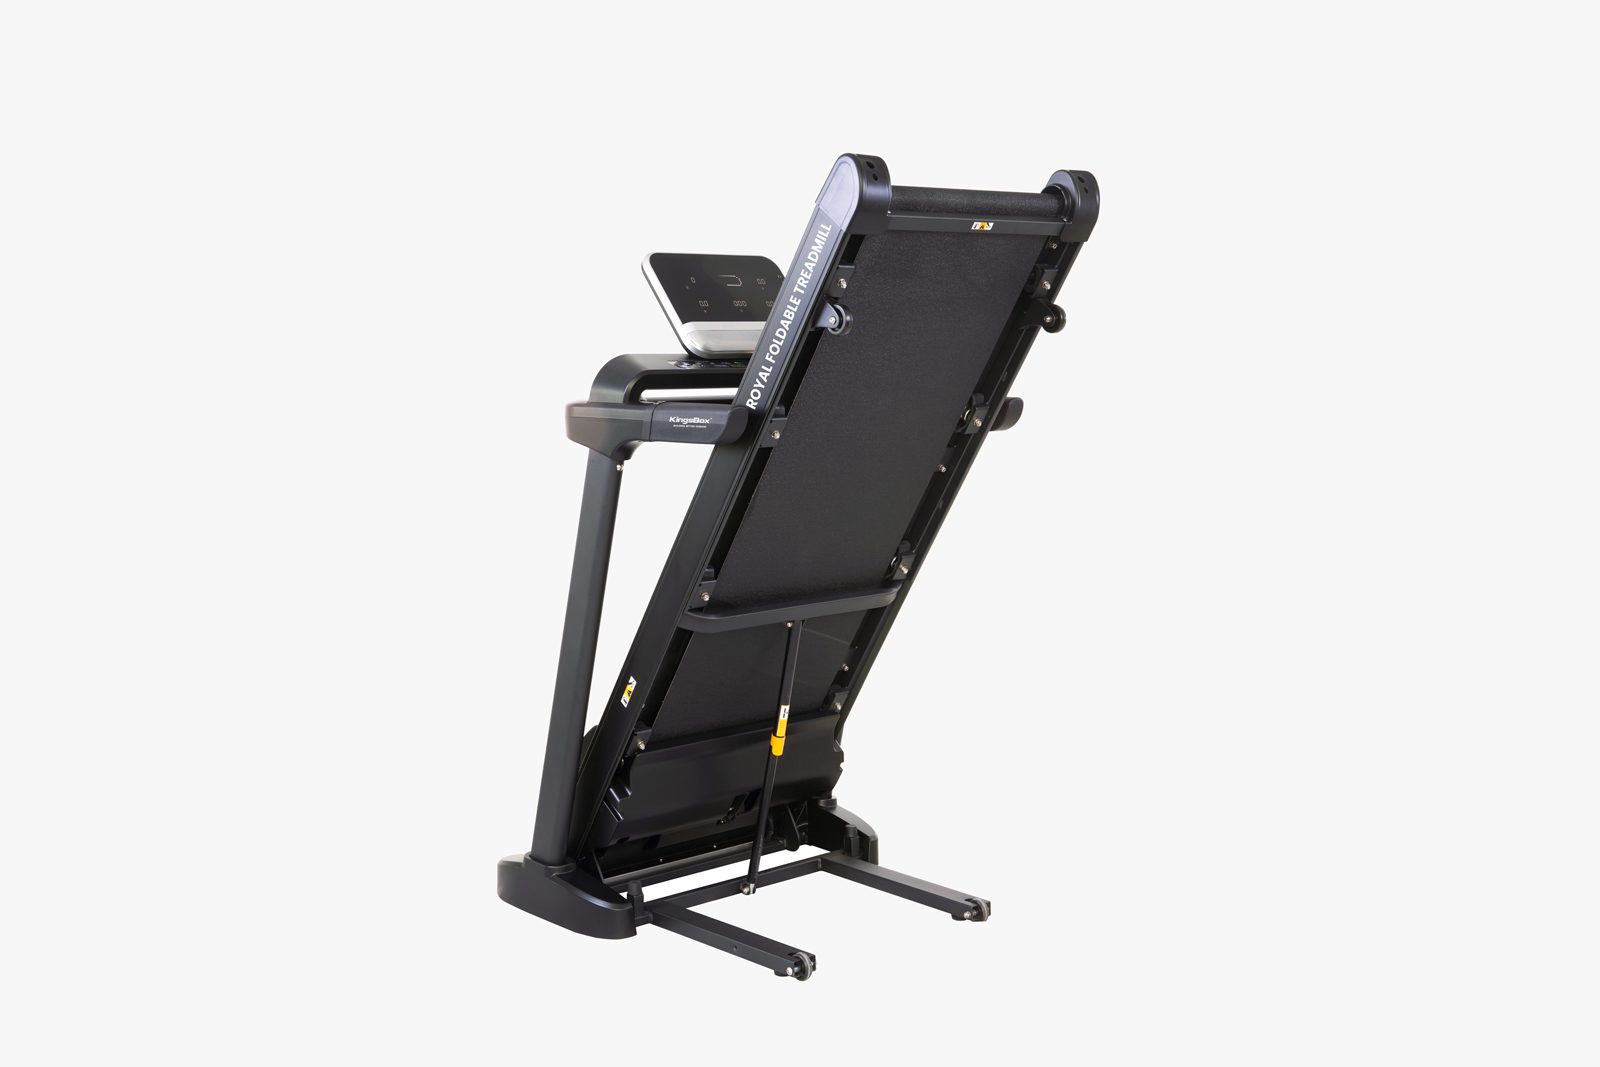 Rabljeno - Royal Foldable Treadmill | KingsBox